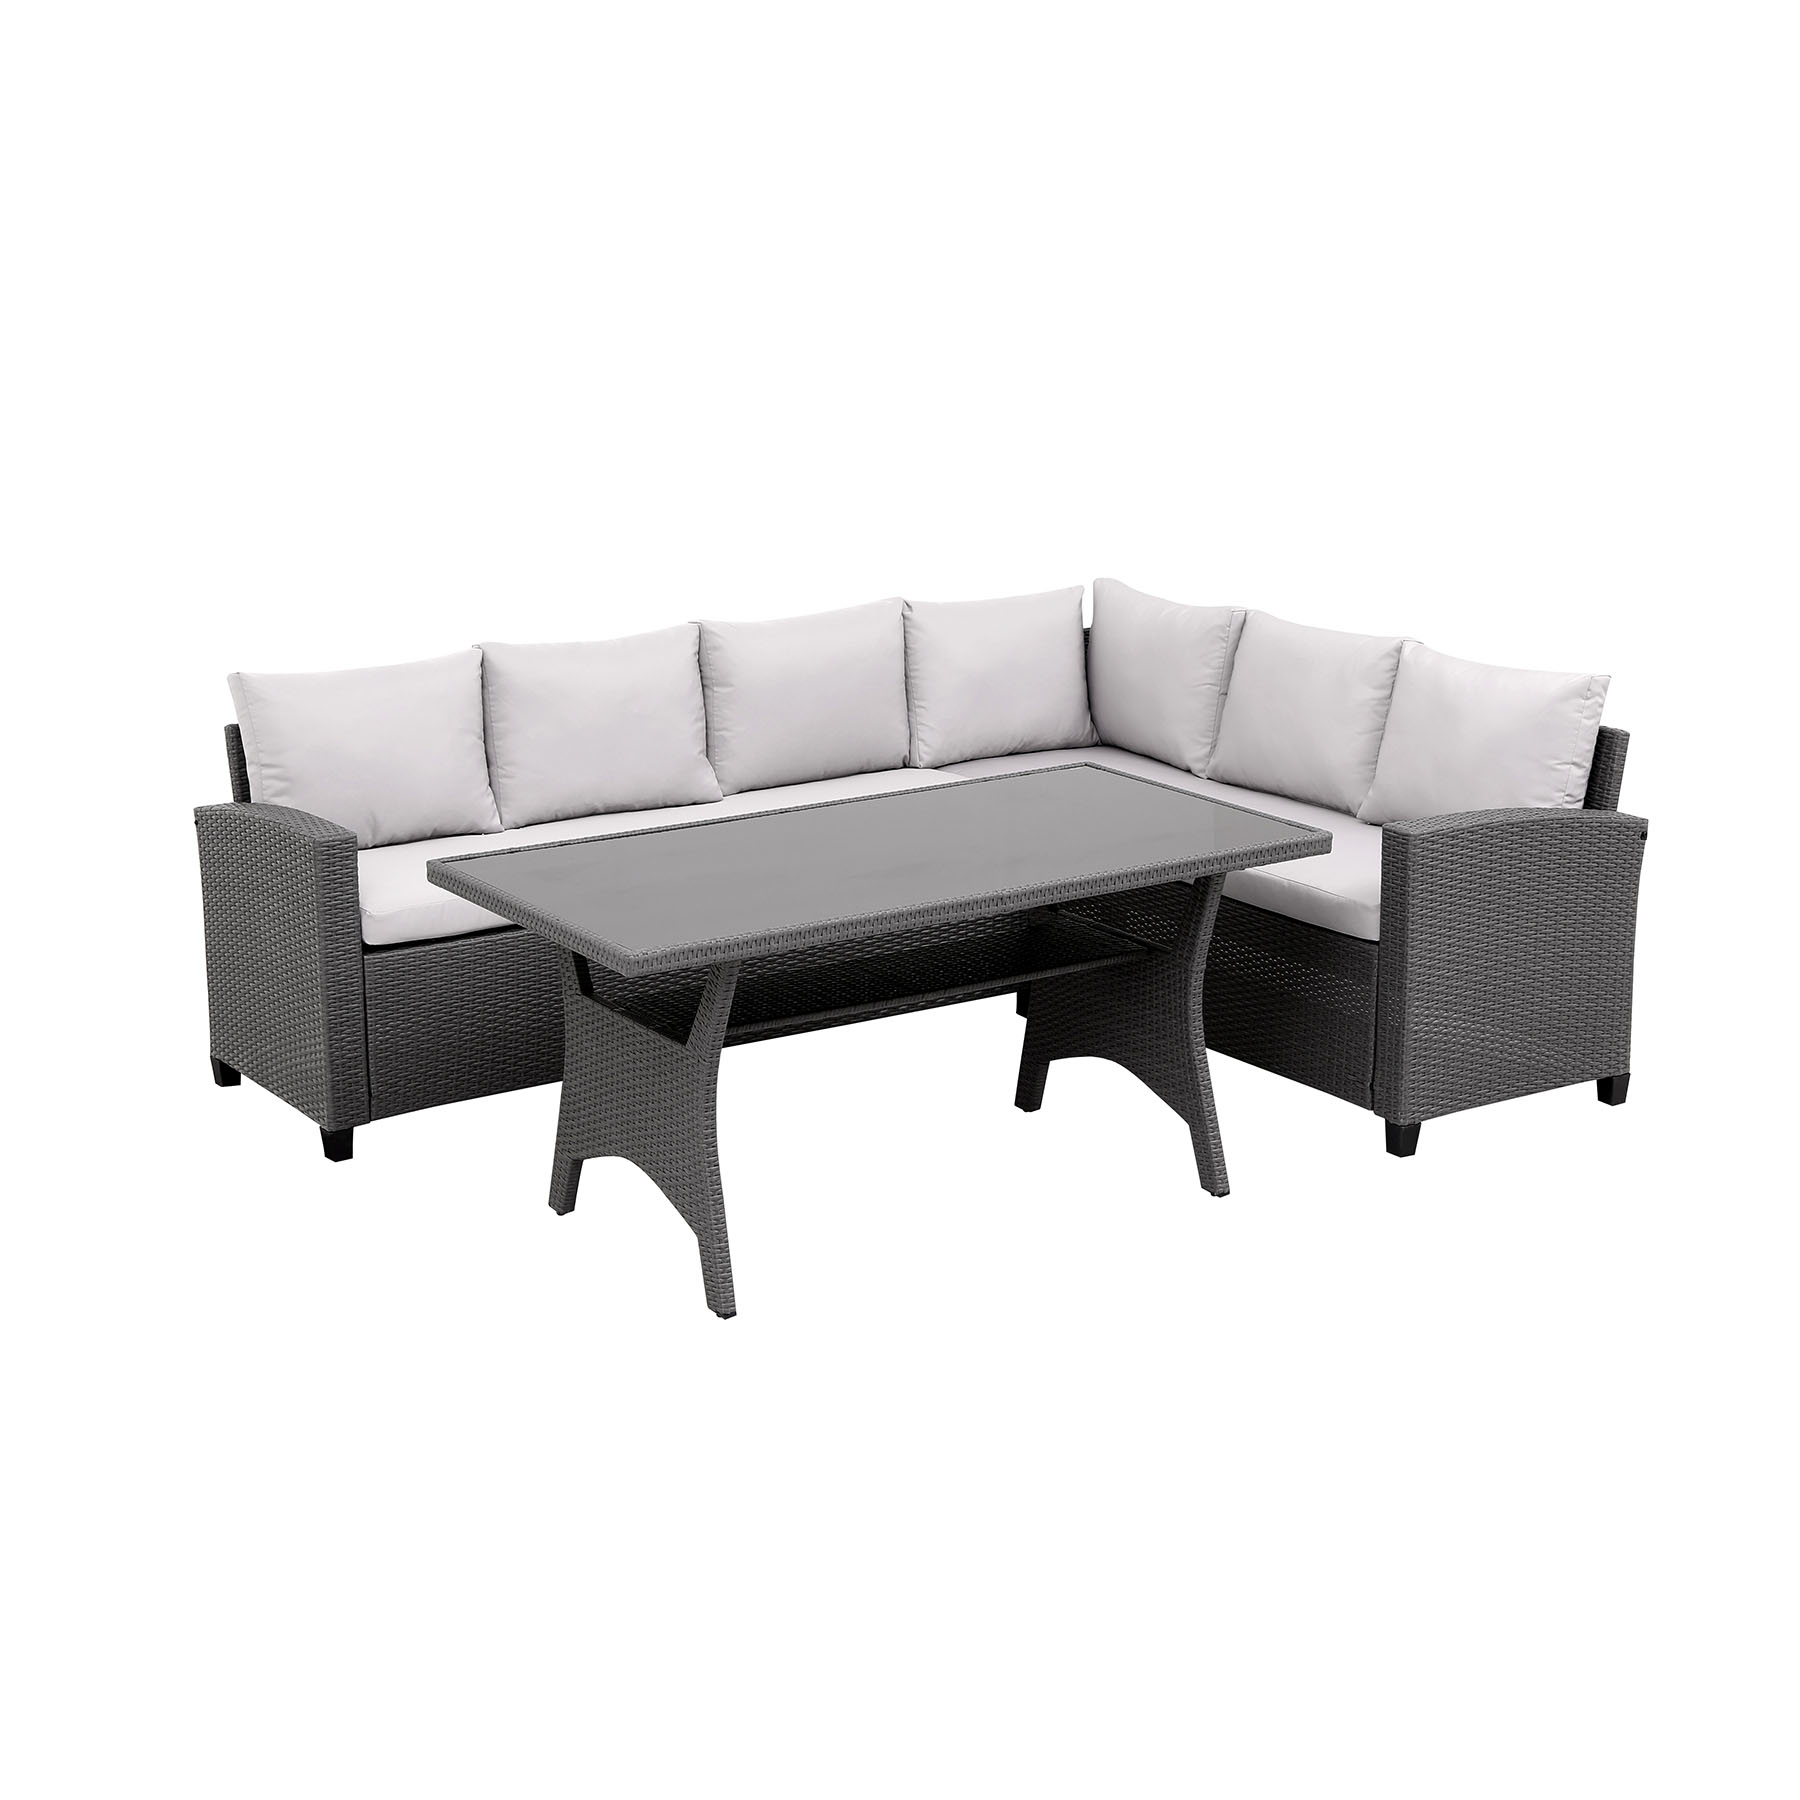 m203 grey rattan garden furniture l shaped dining corner set